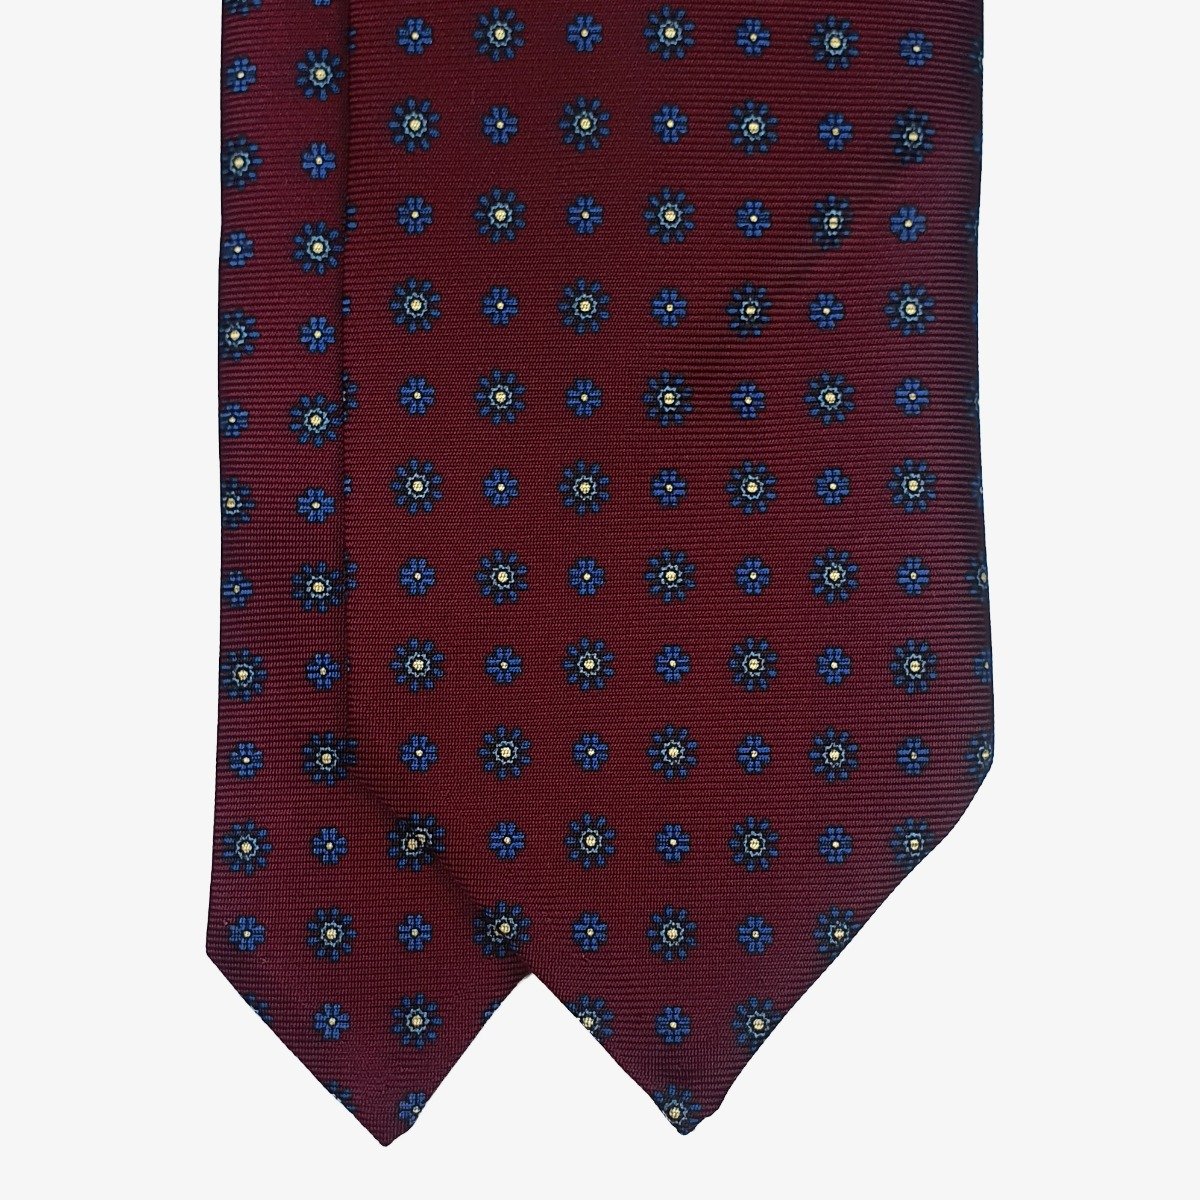 Shibumi Firenze wine silk tie with blue floral pattern II